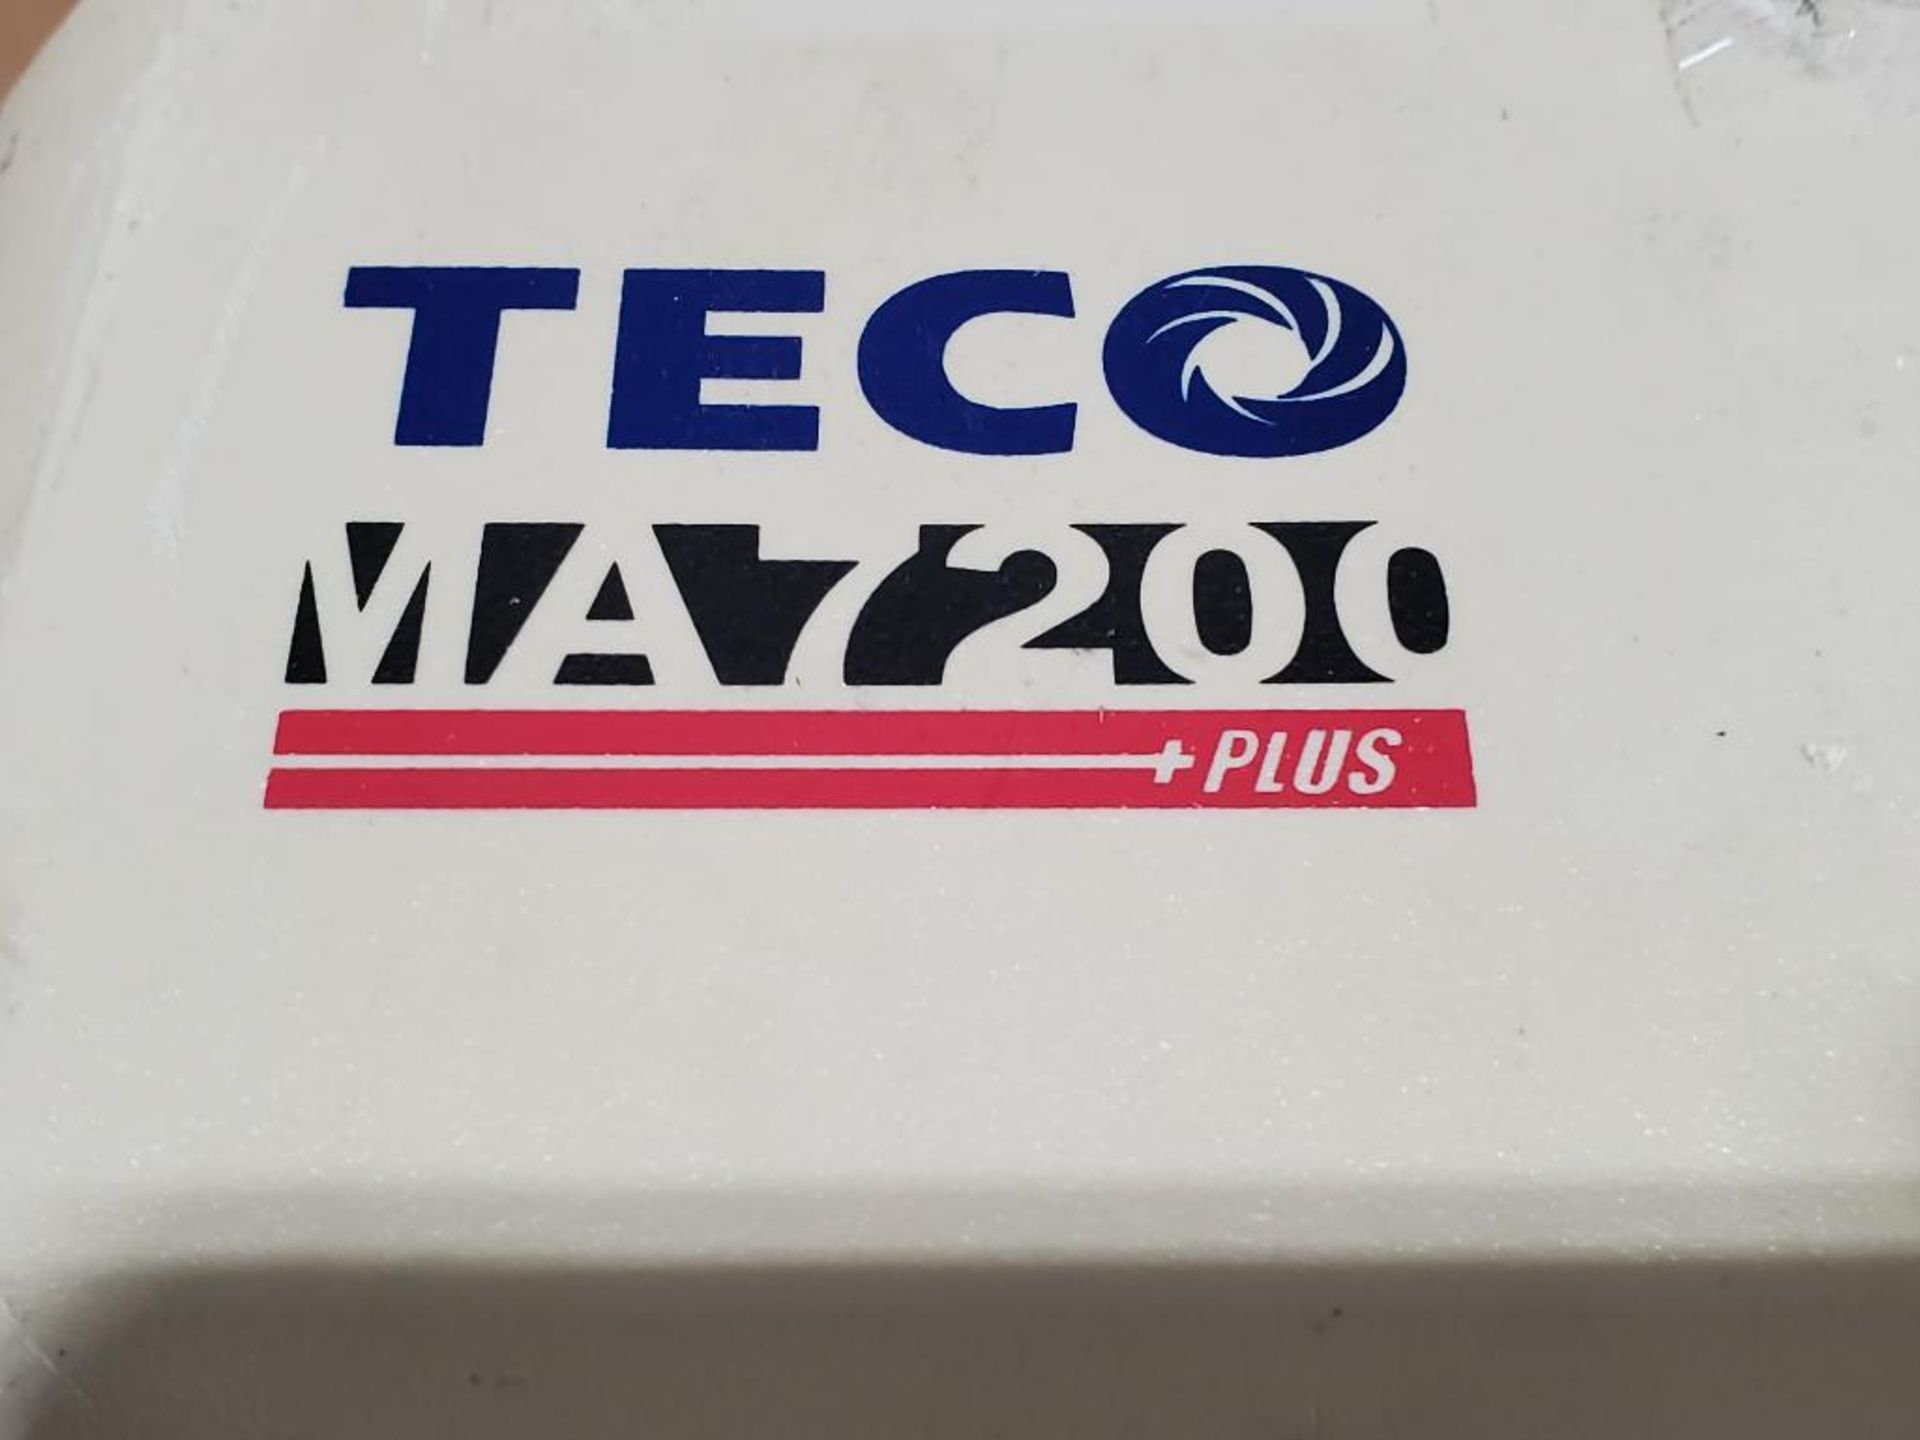 20.6KVA Teco Ma7200 Plus drive. Model: MA7200-4015-N1. - Image 3 of 7